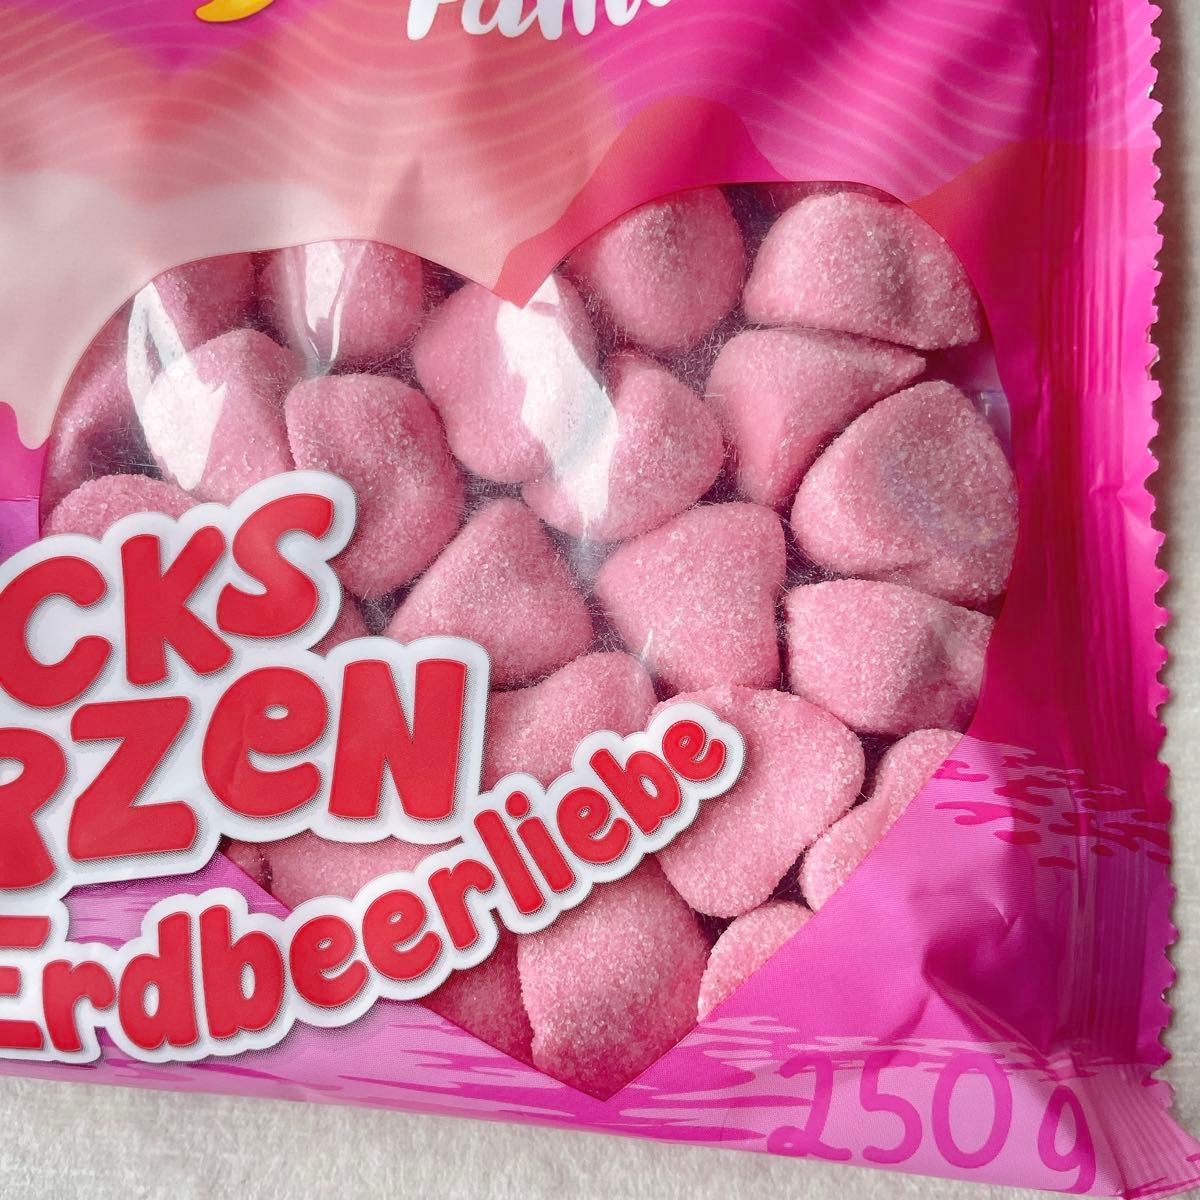 Katjes【日本未販売】Glcksherzen Erdbeerliebe カッチェス　ぷにぷに　グミ